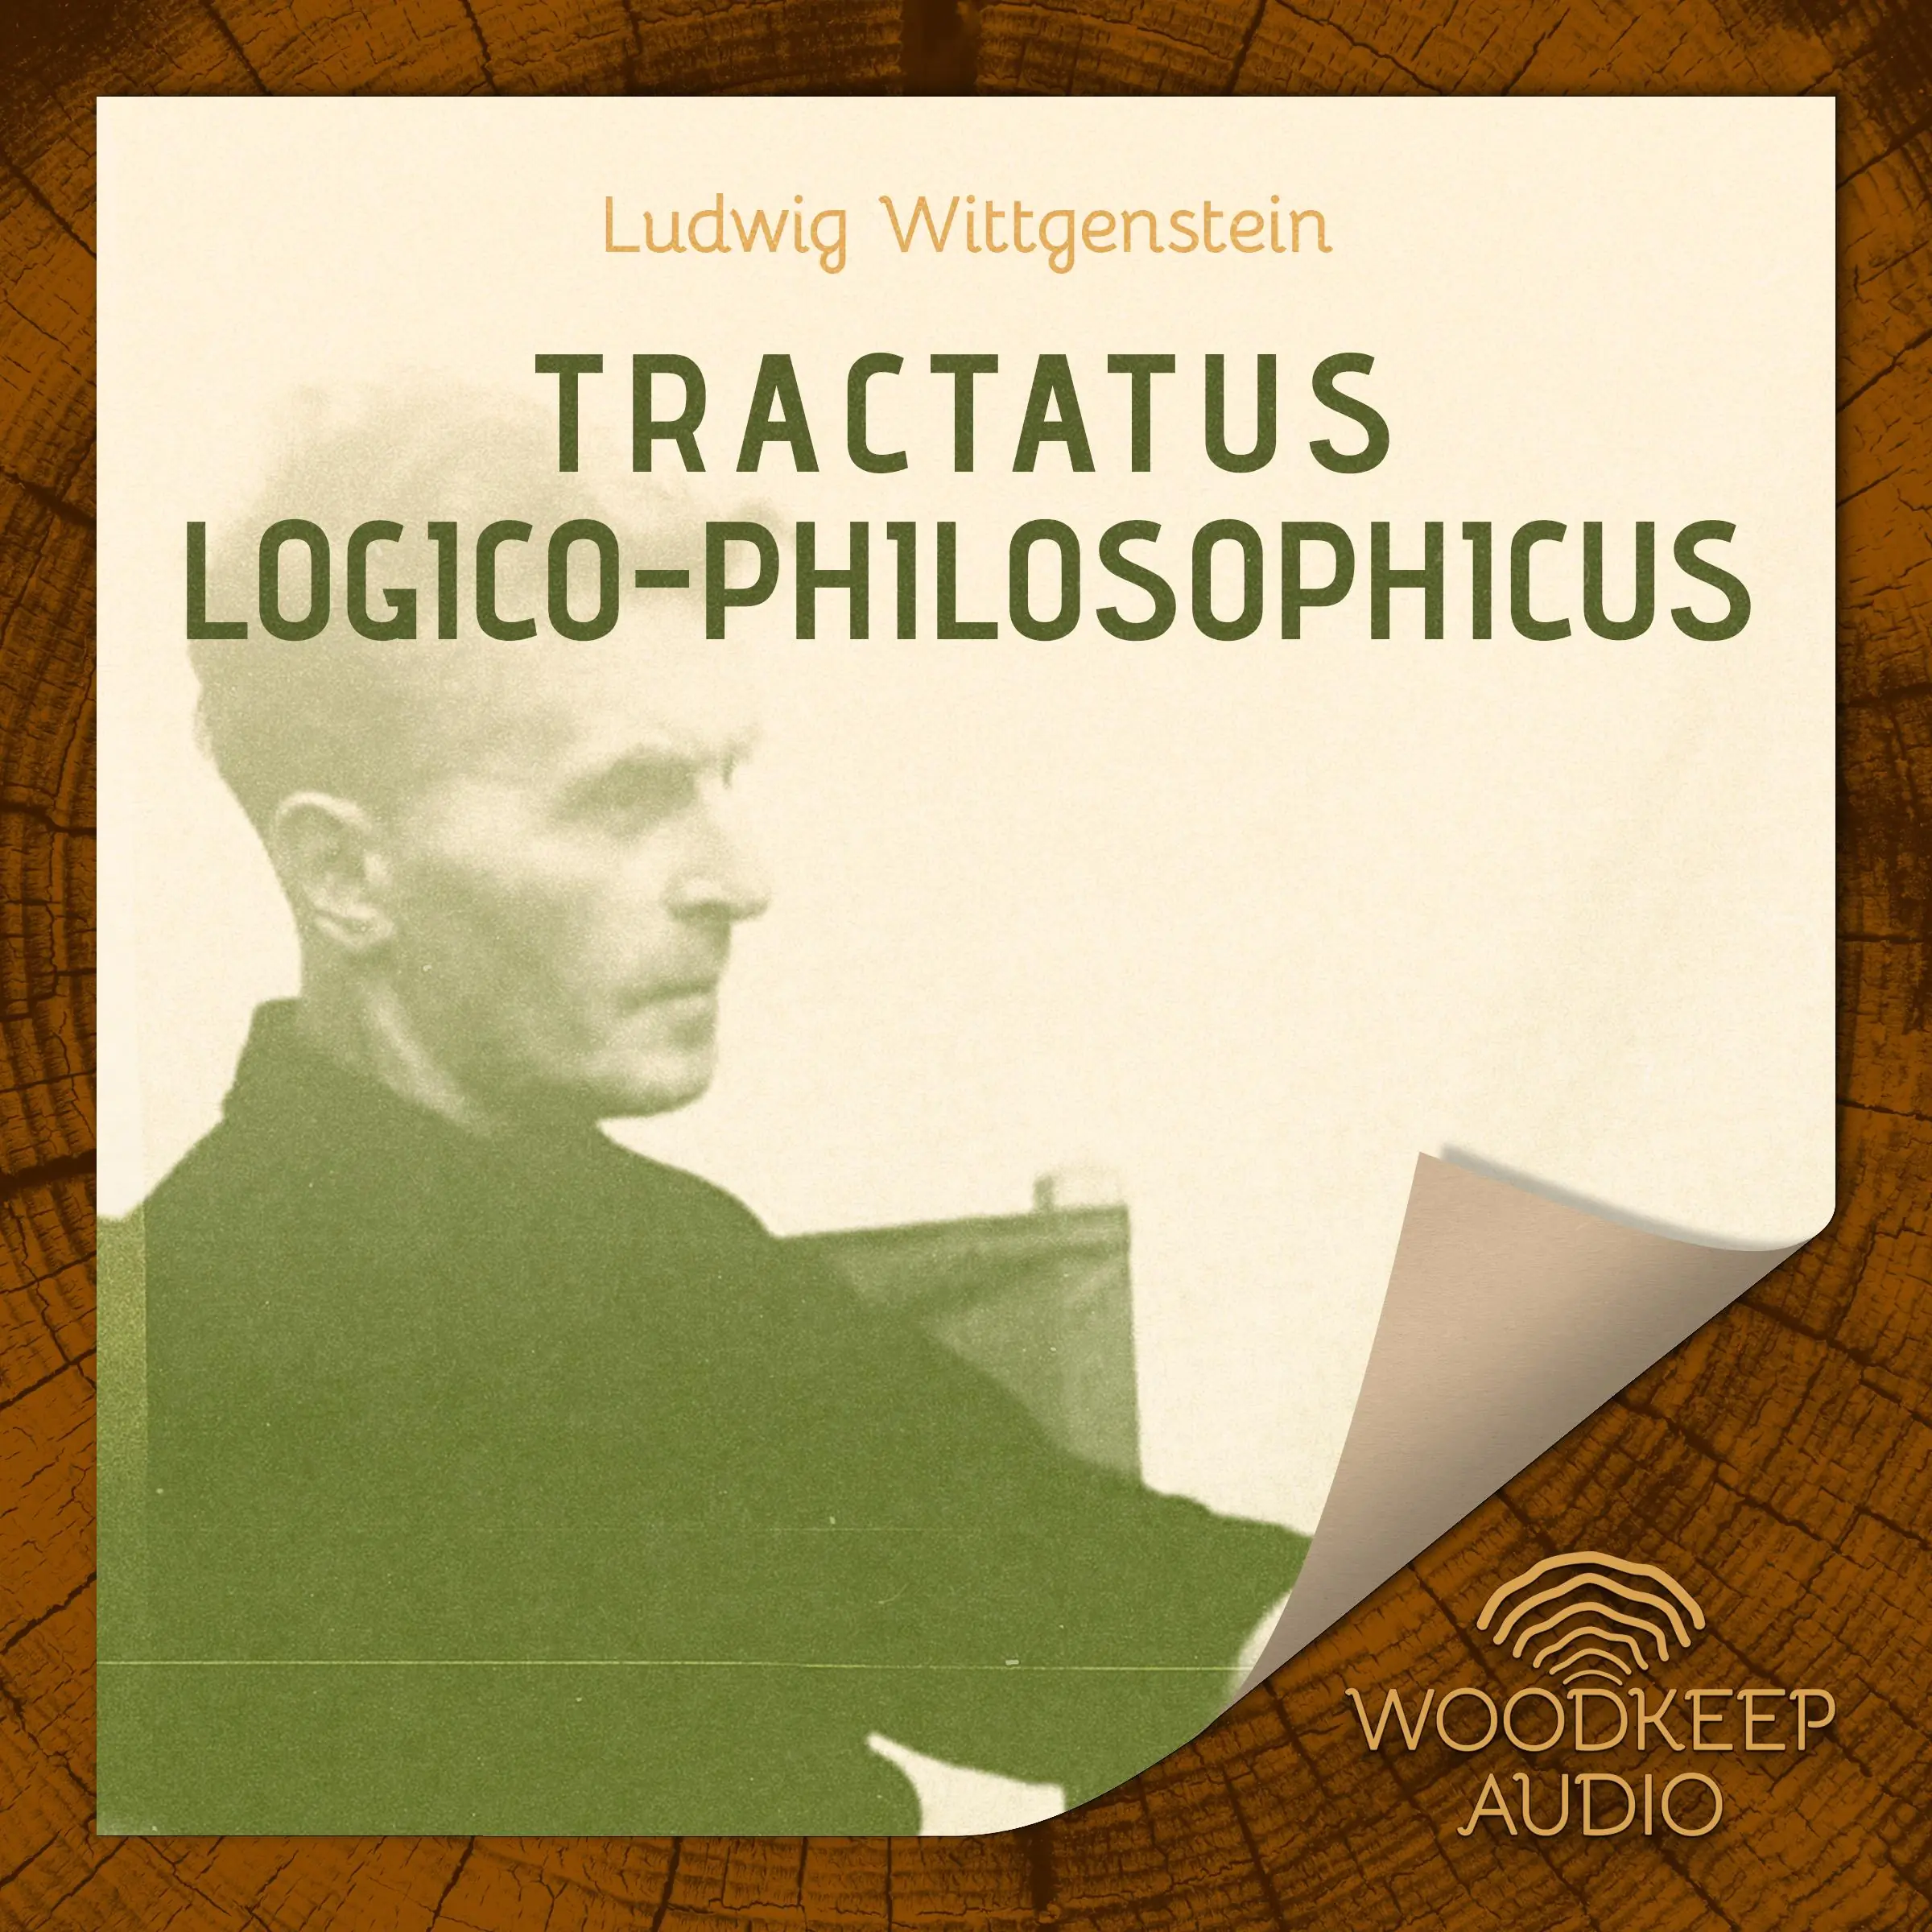 Tractatus Logico - Philosophicus Audiobook by Ludwig Wittgenstein